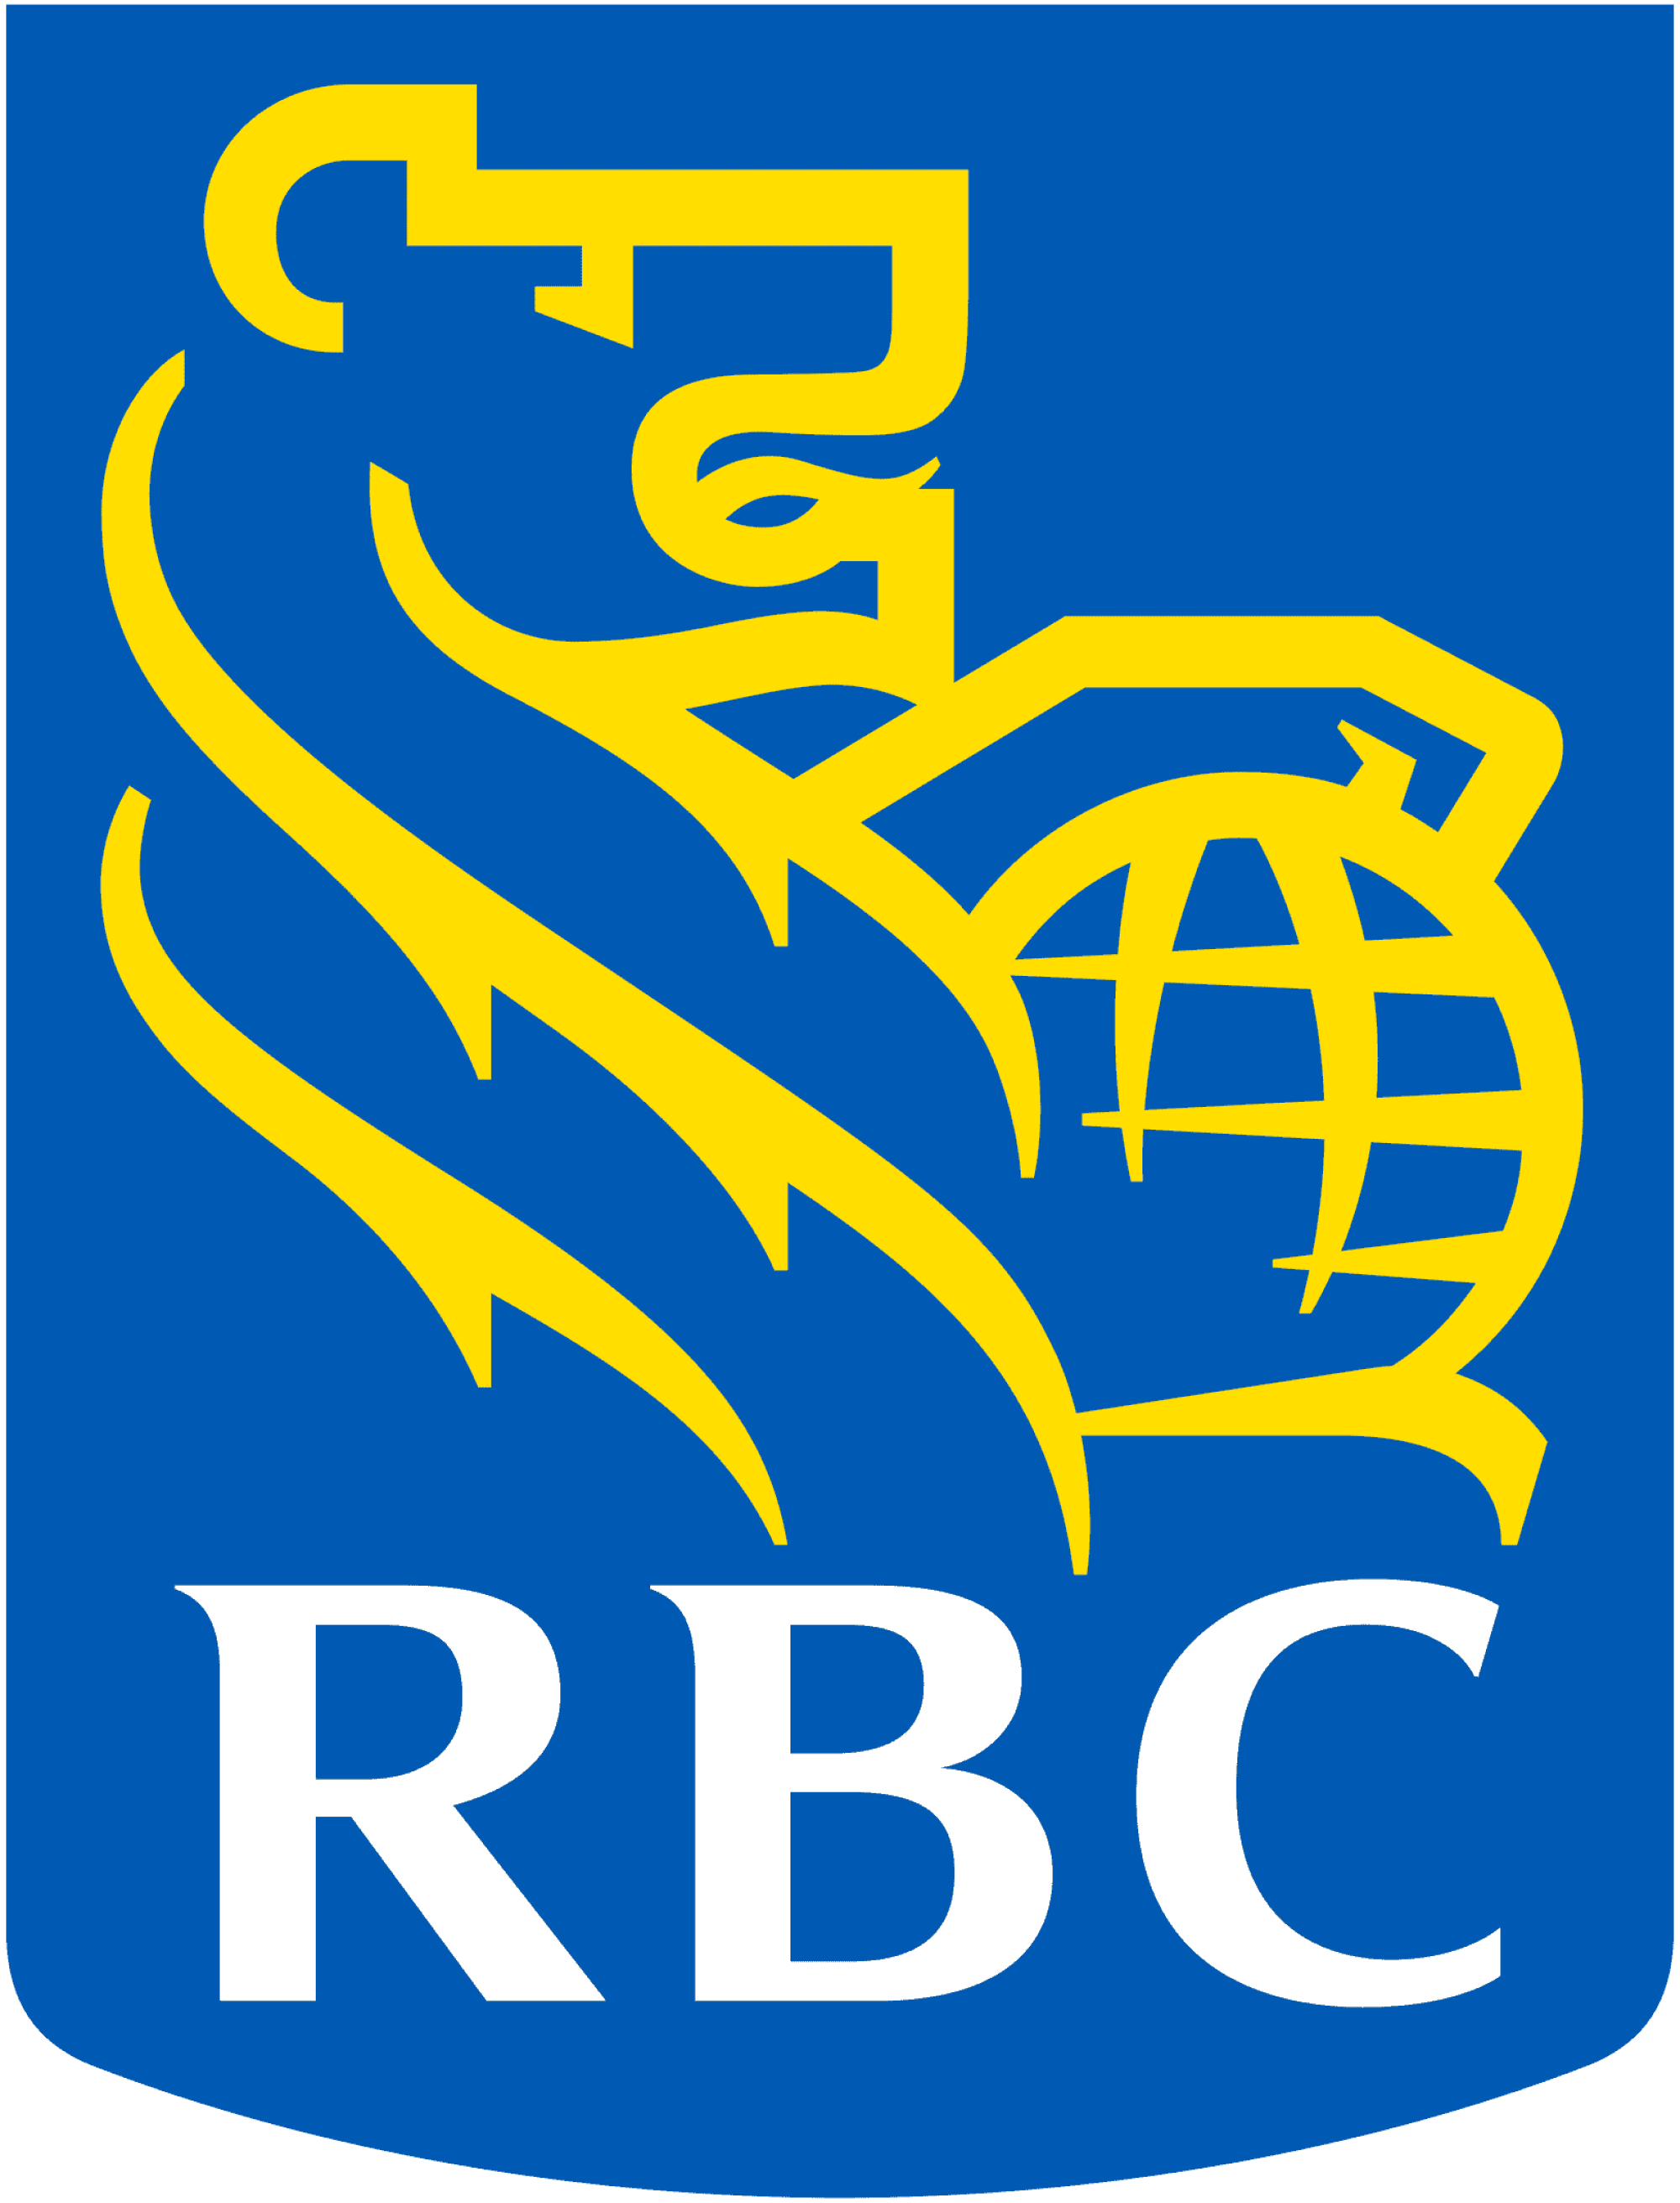 RBC logo on transparent background